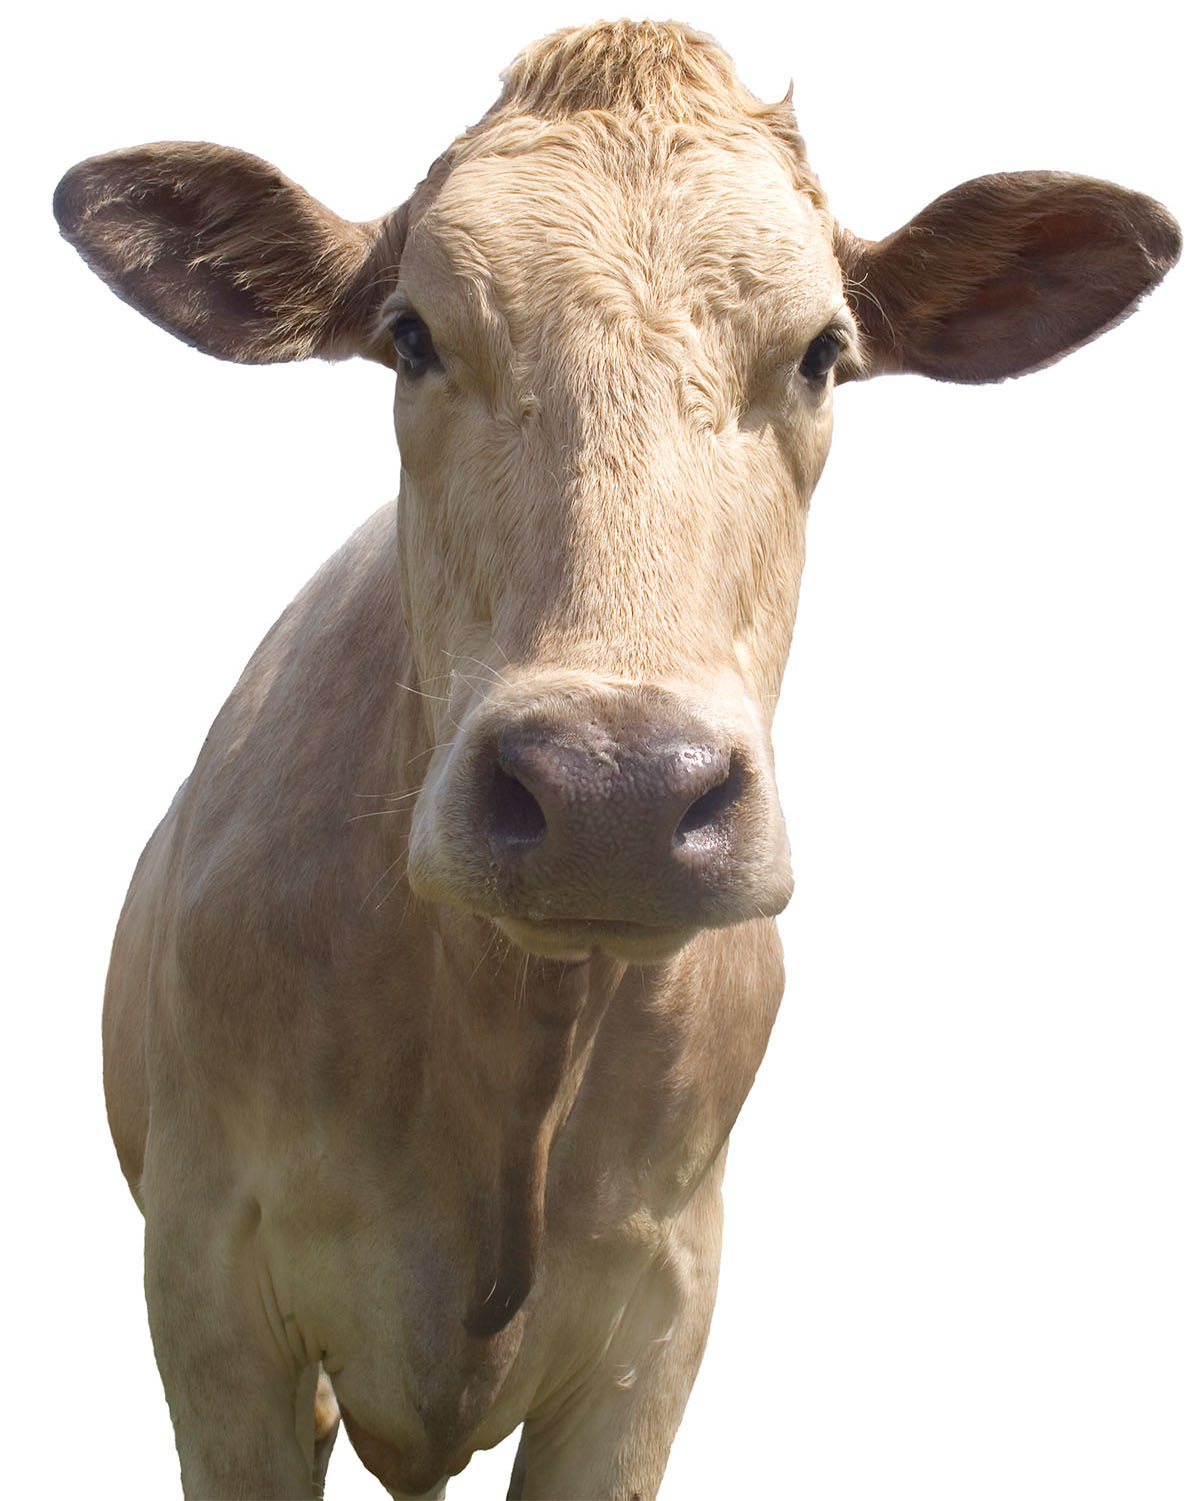 A tan cow